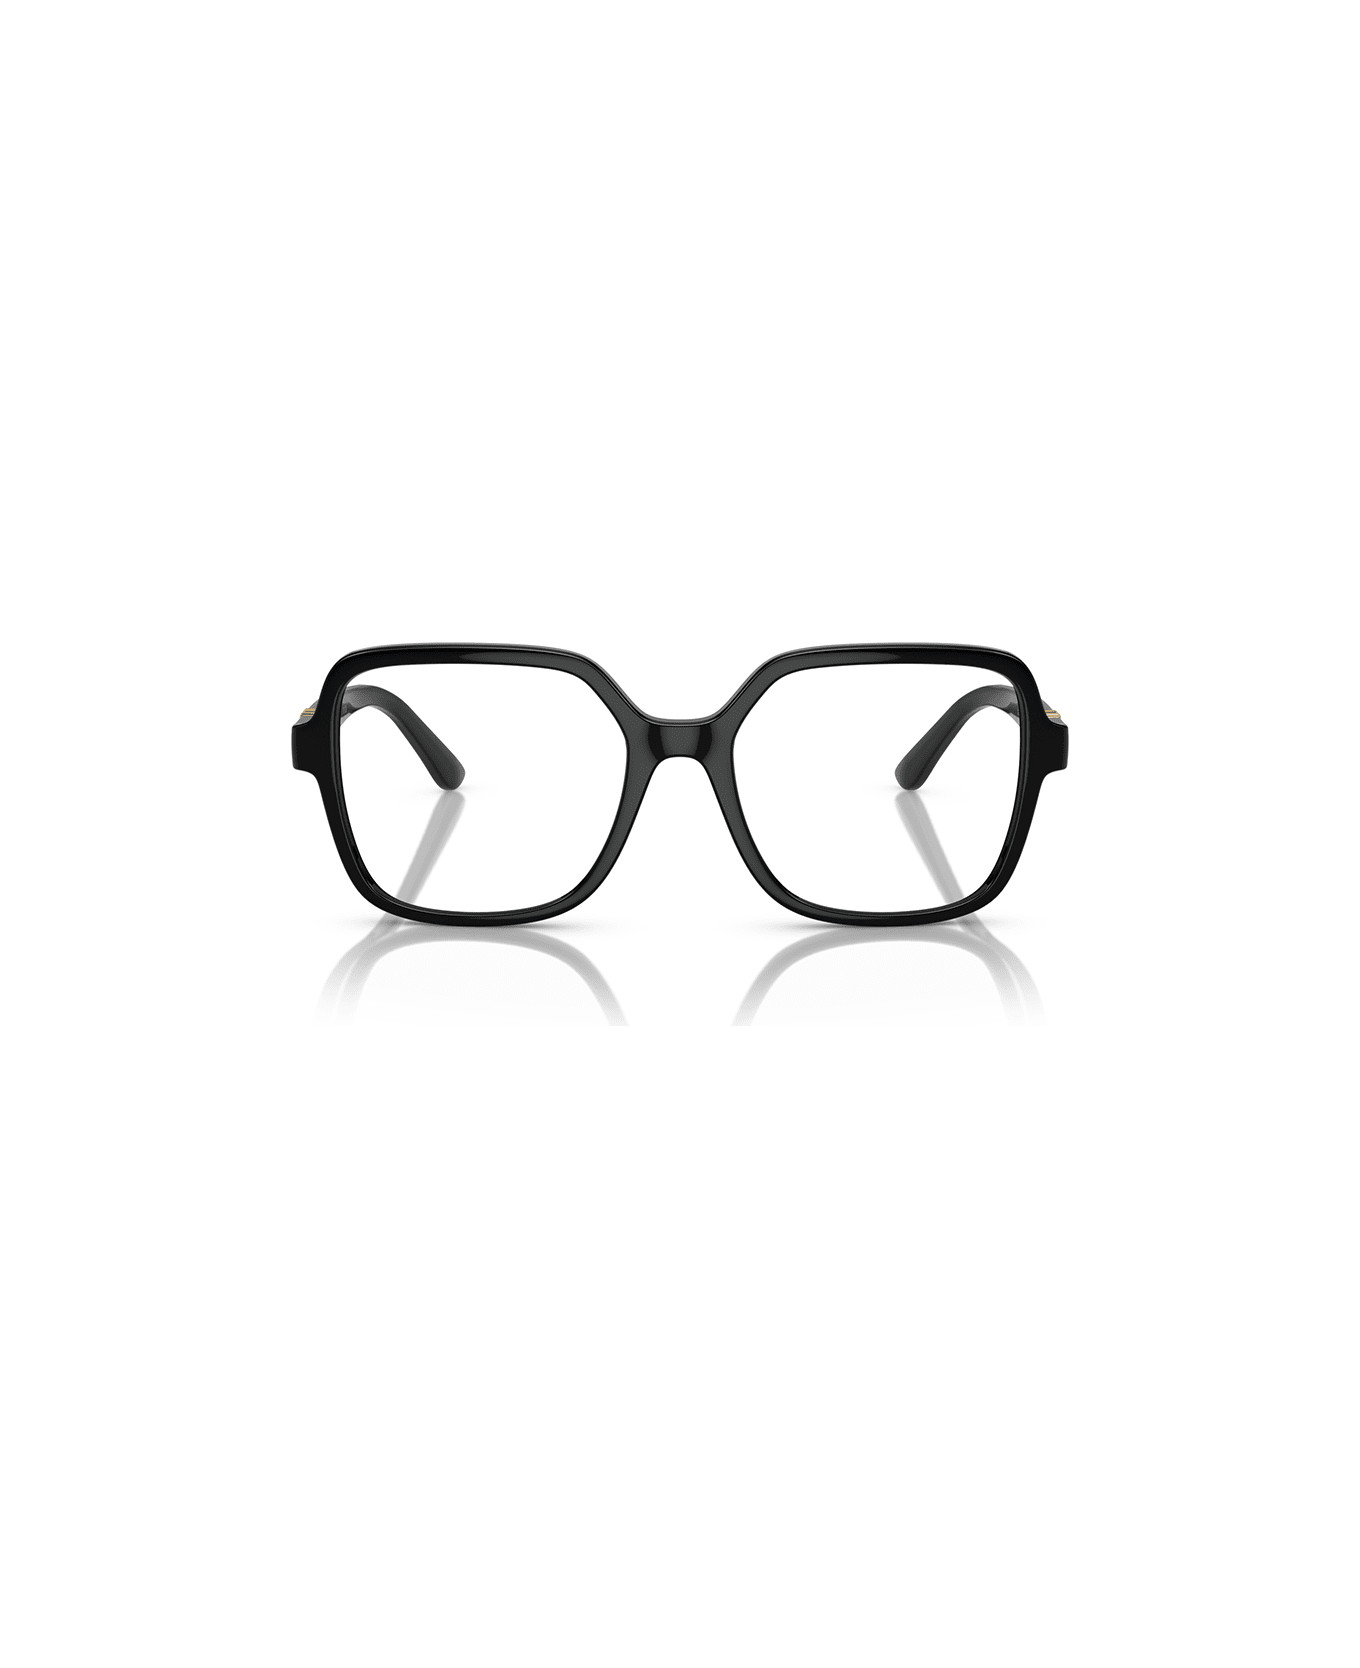 Dolce & Gabbana Eyewear Glasses - Nero